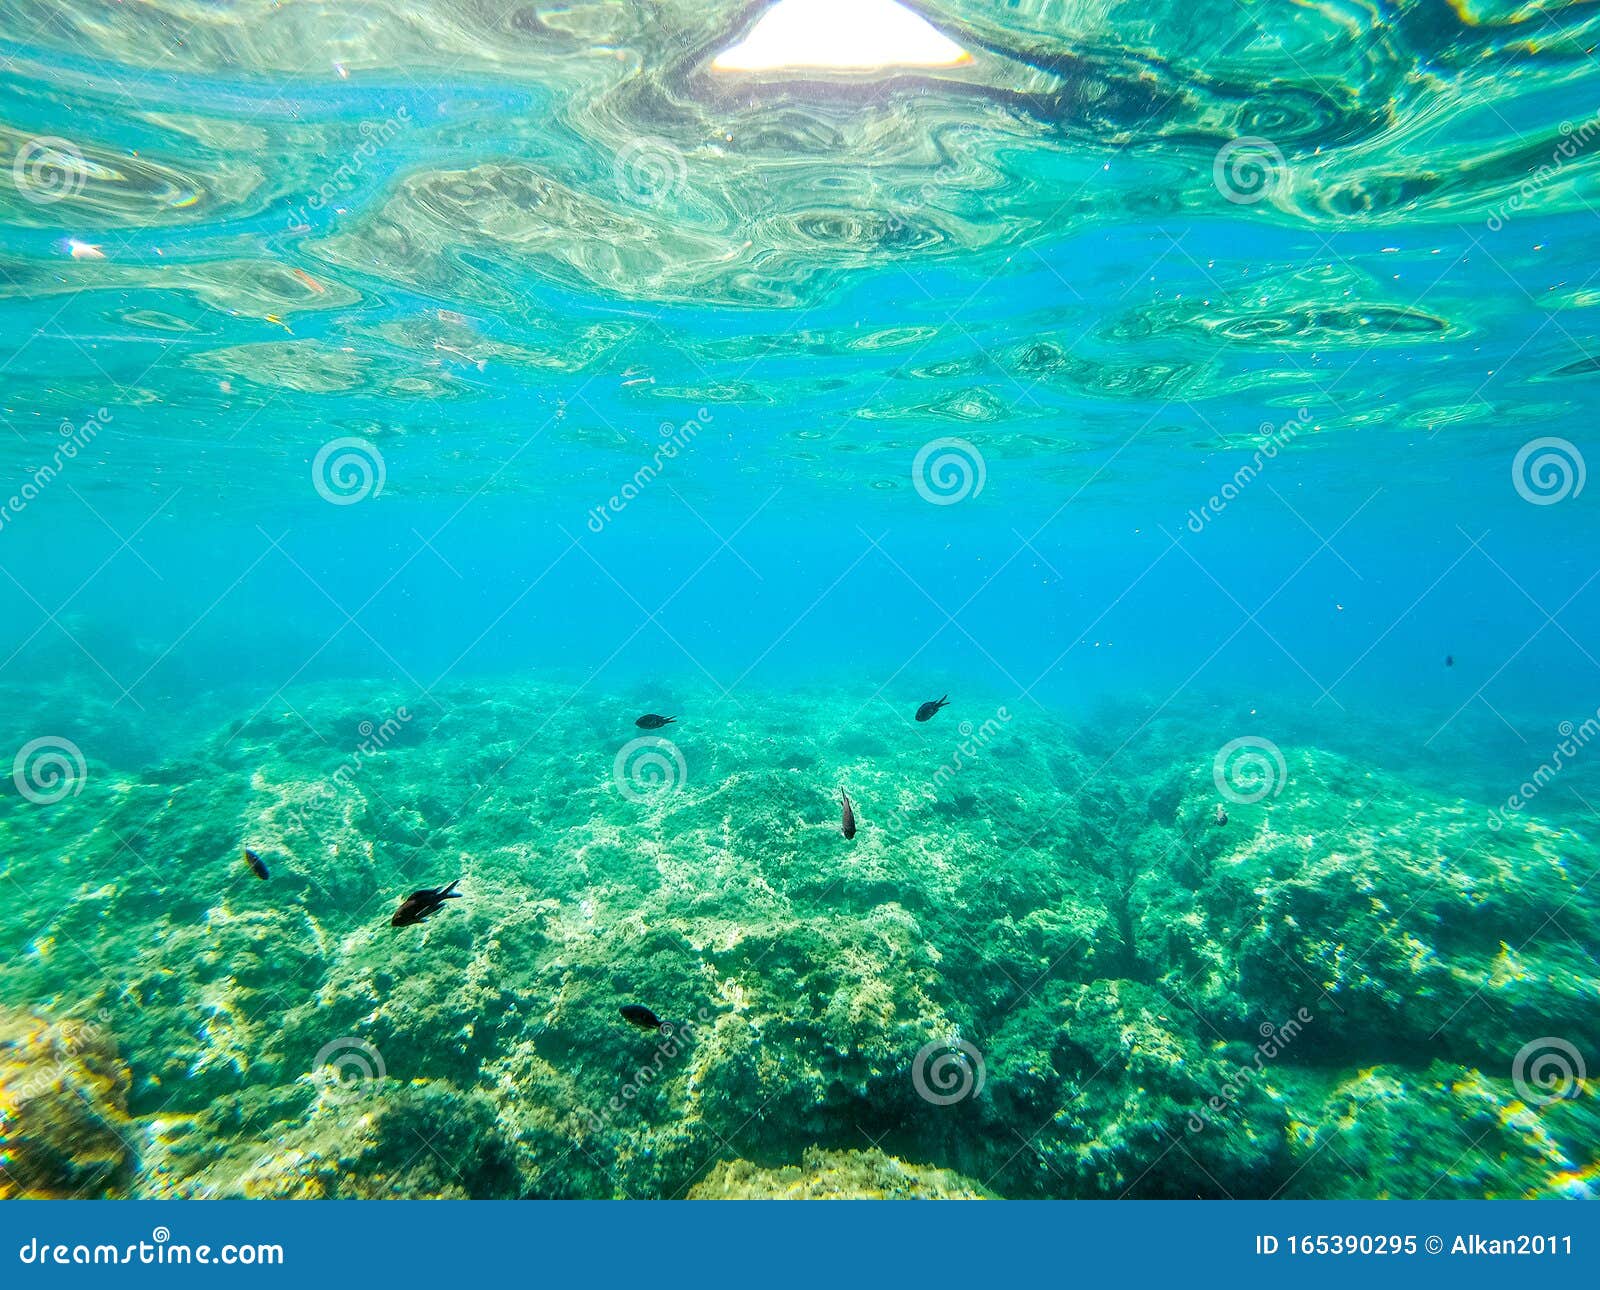 Underwater View of Alghero Rocky Sea Floor Stock Image - Image of light ...